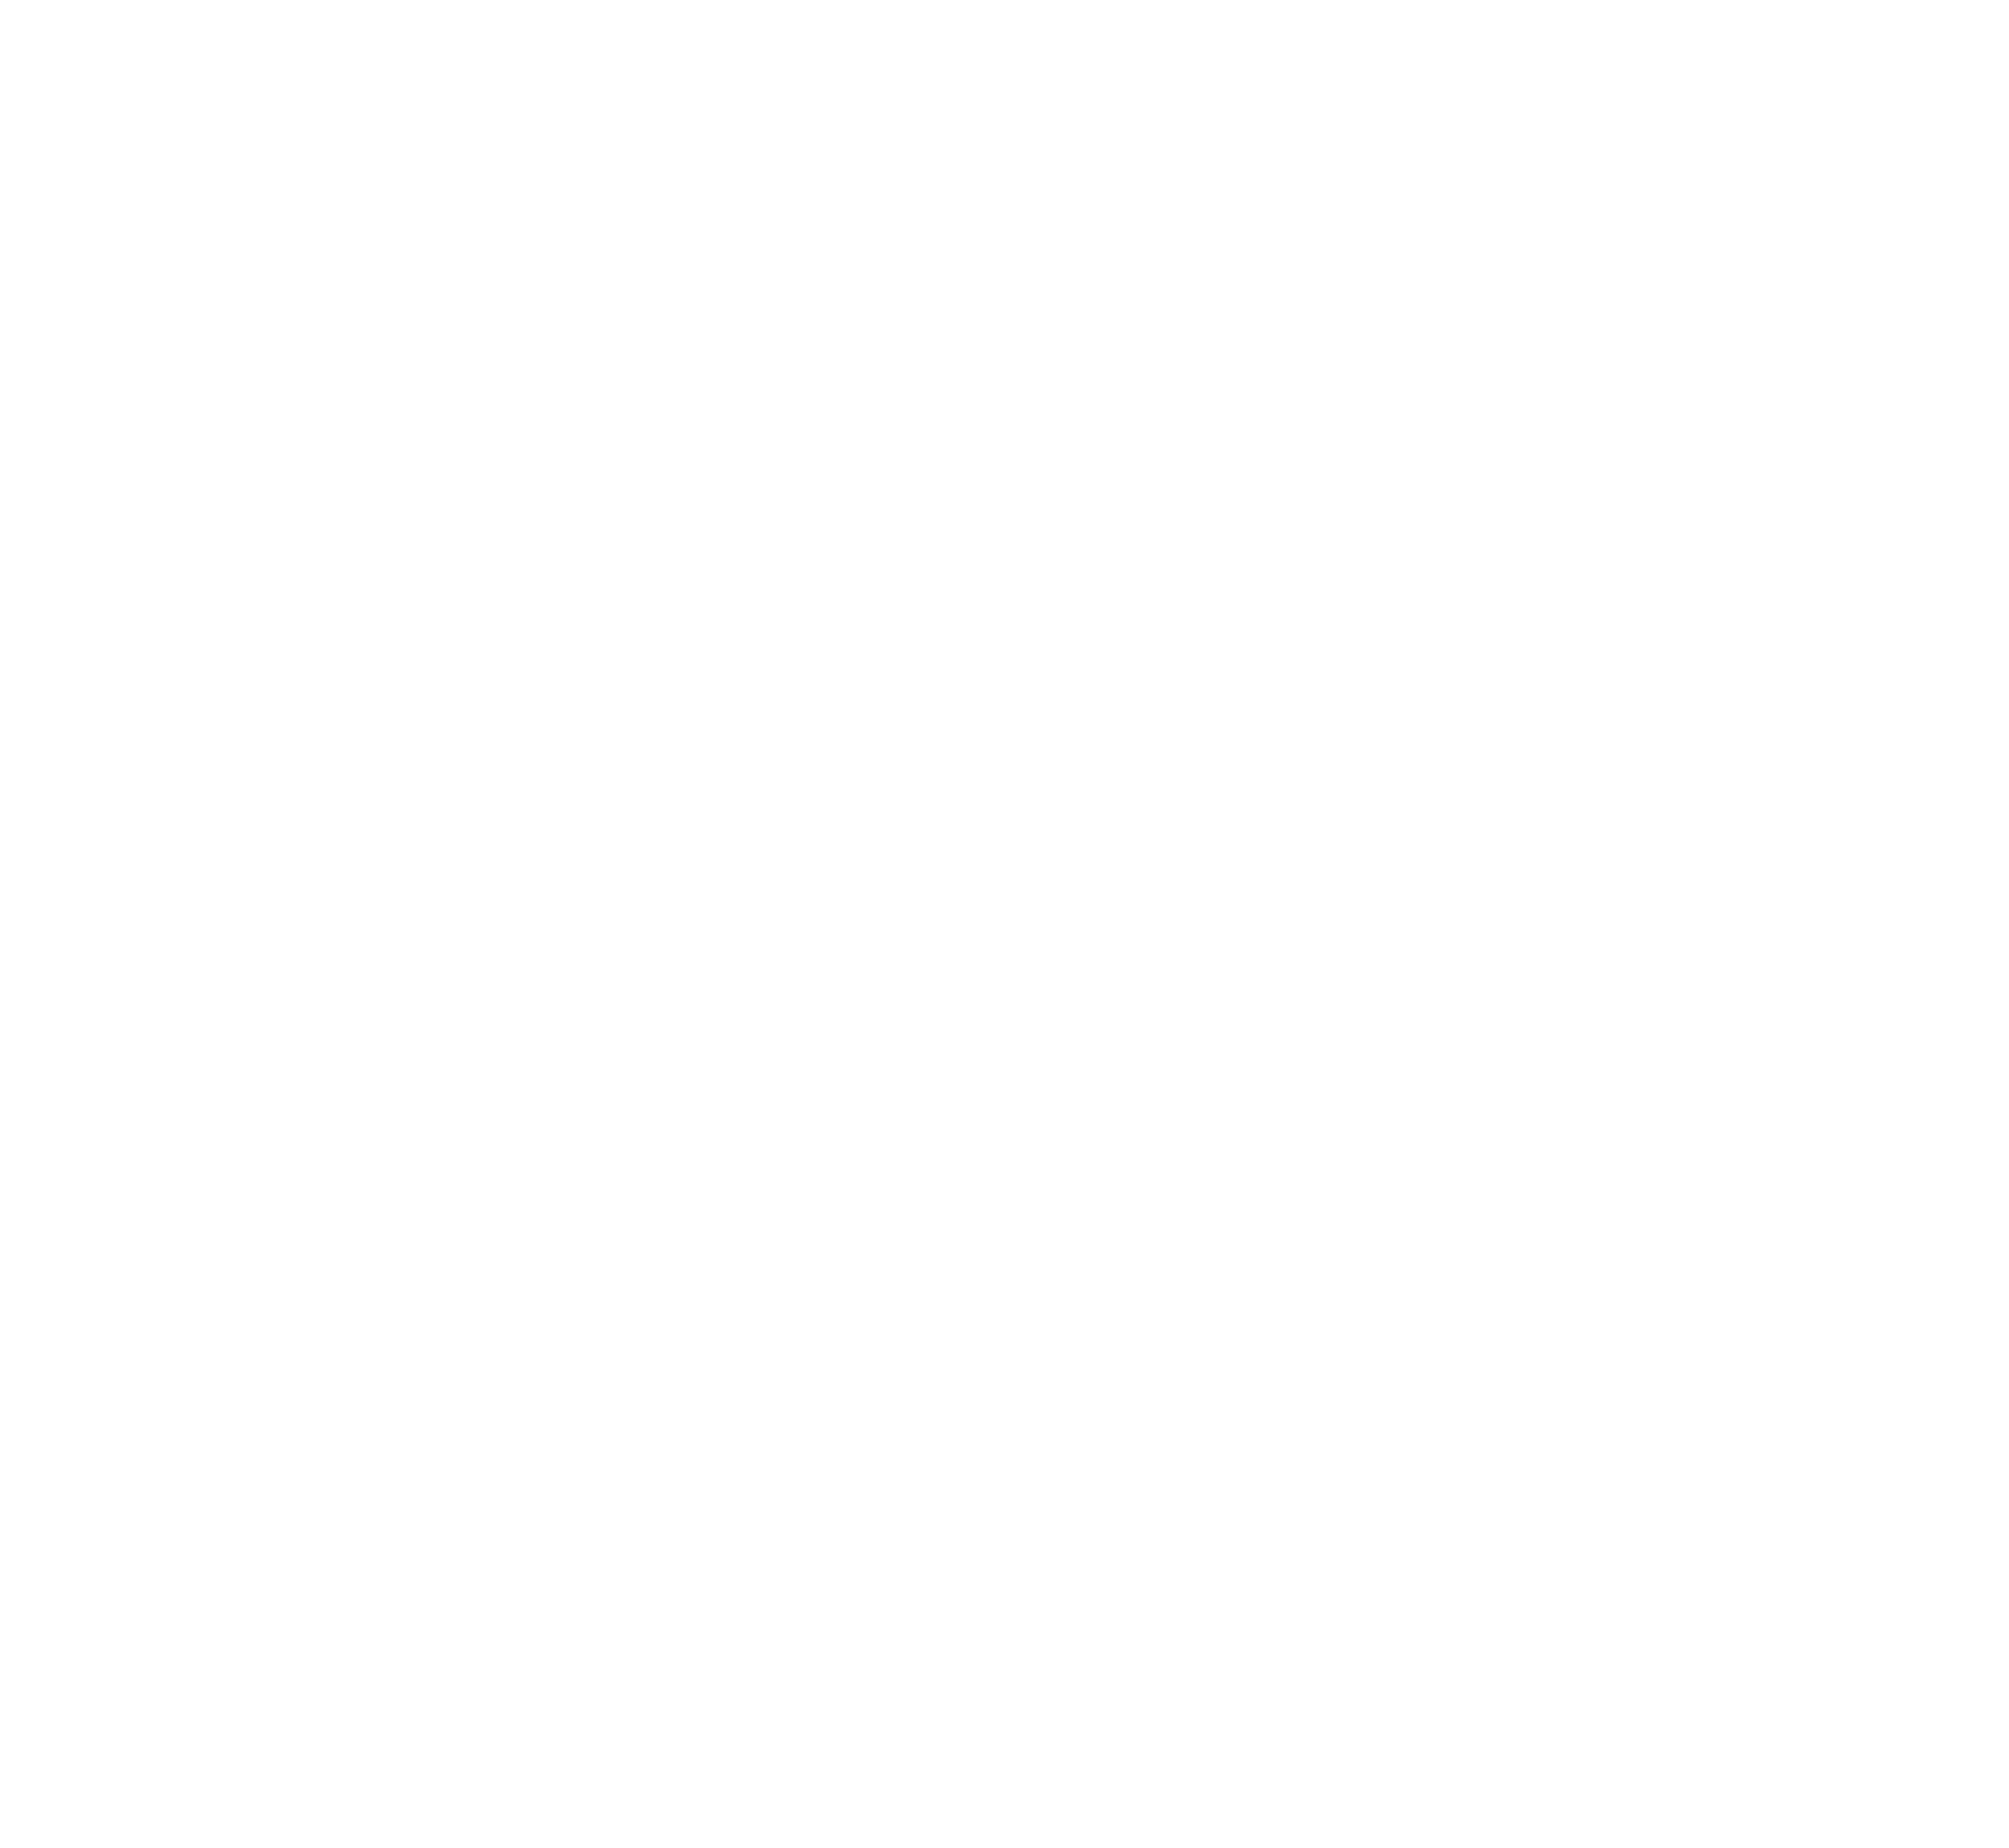 New Moon Mushrooms logo